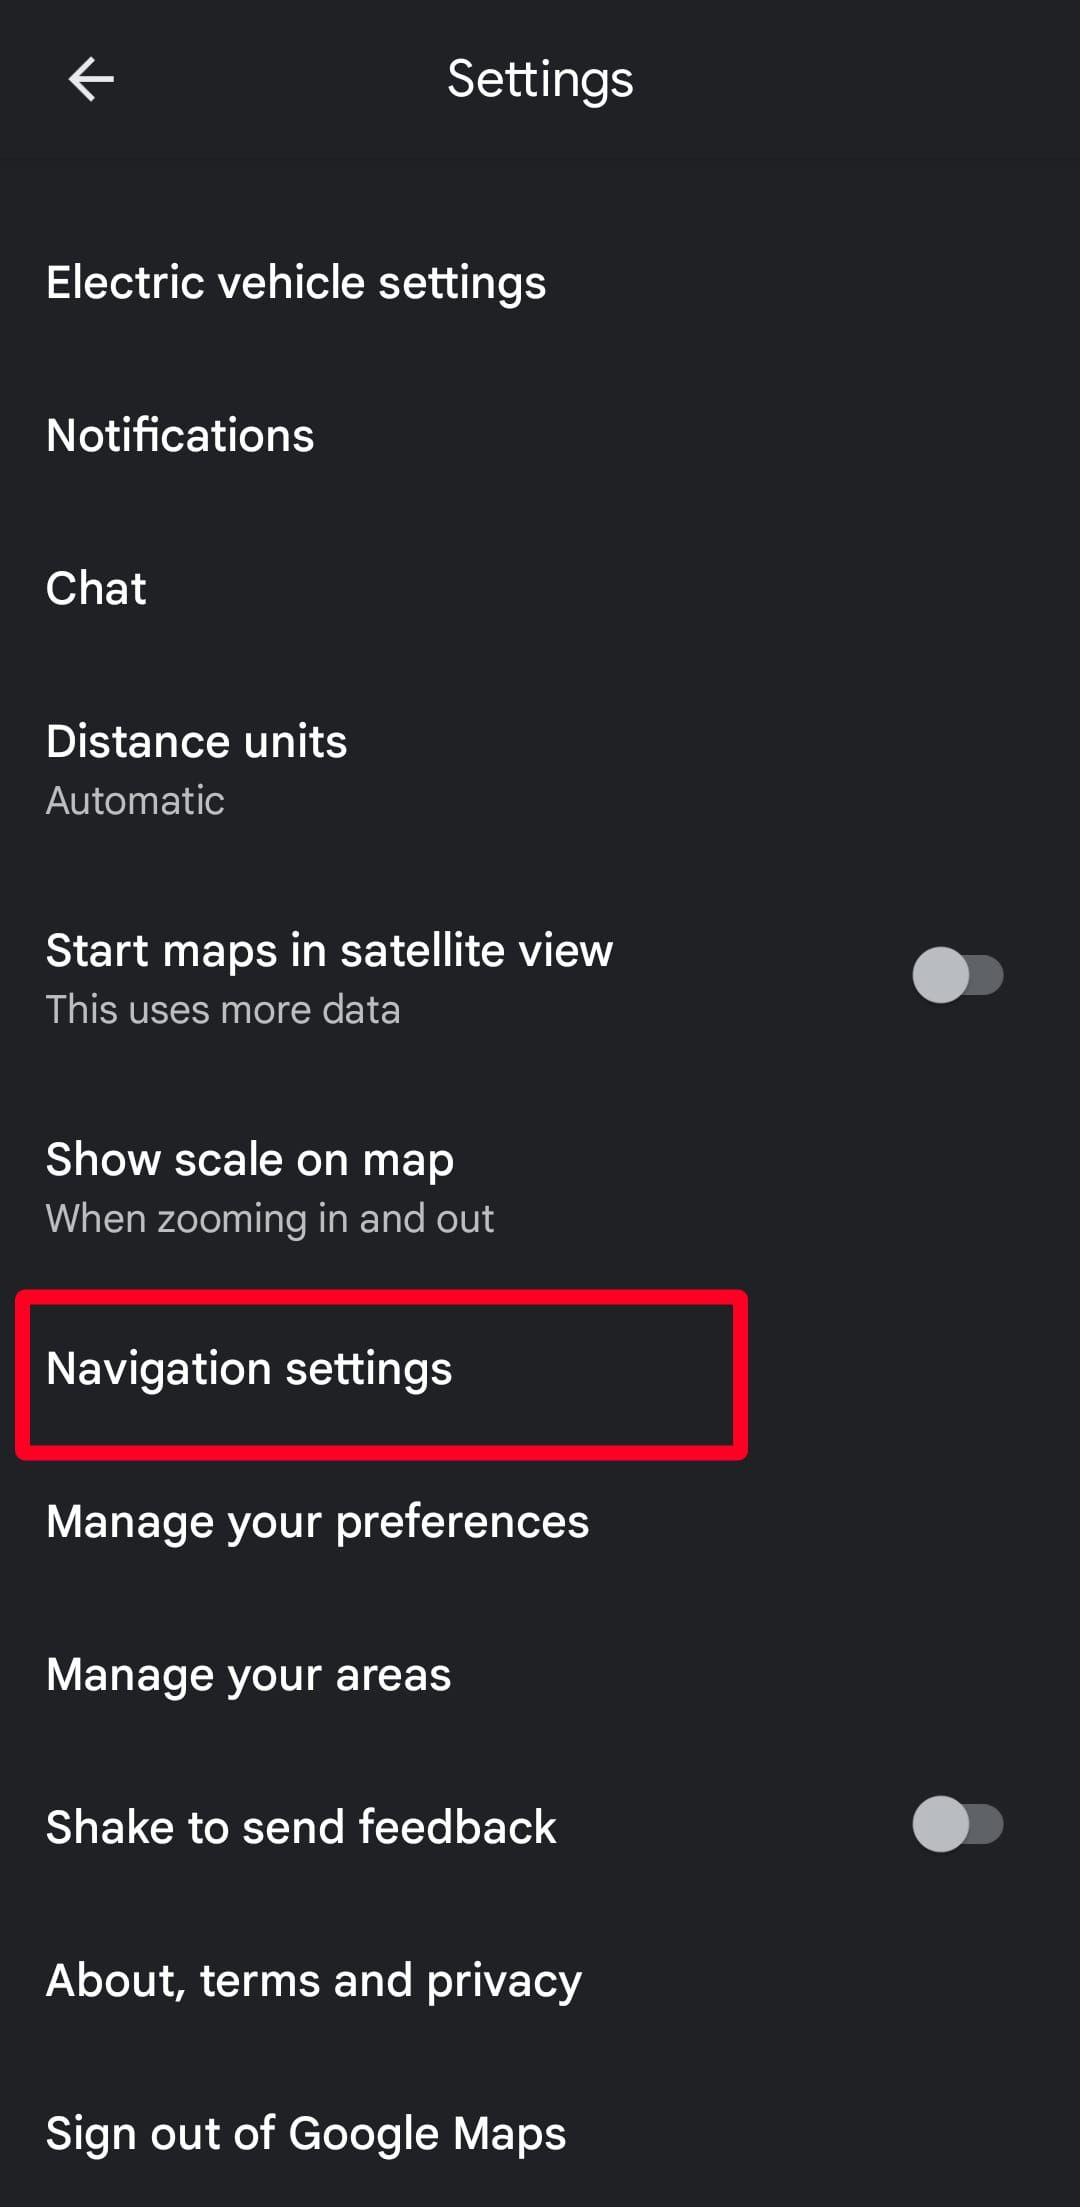 Google Maps settings menu on the mobile app